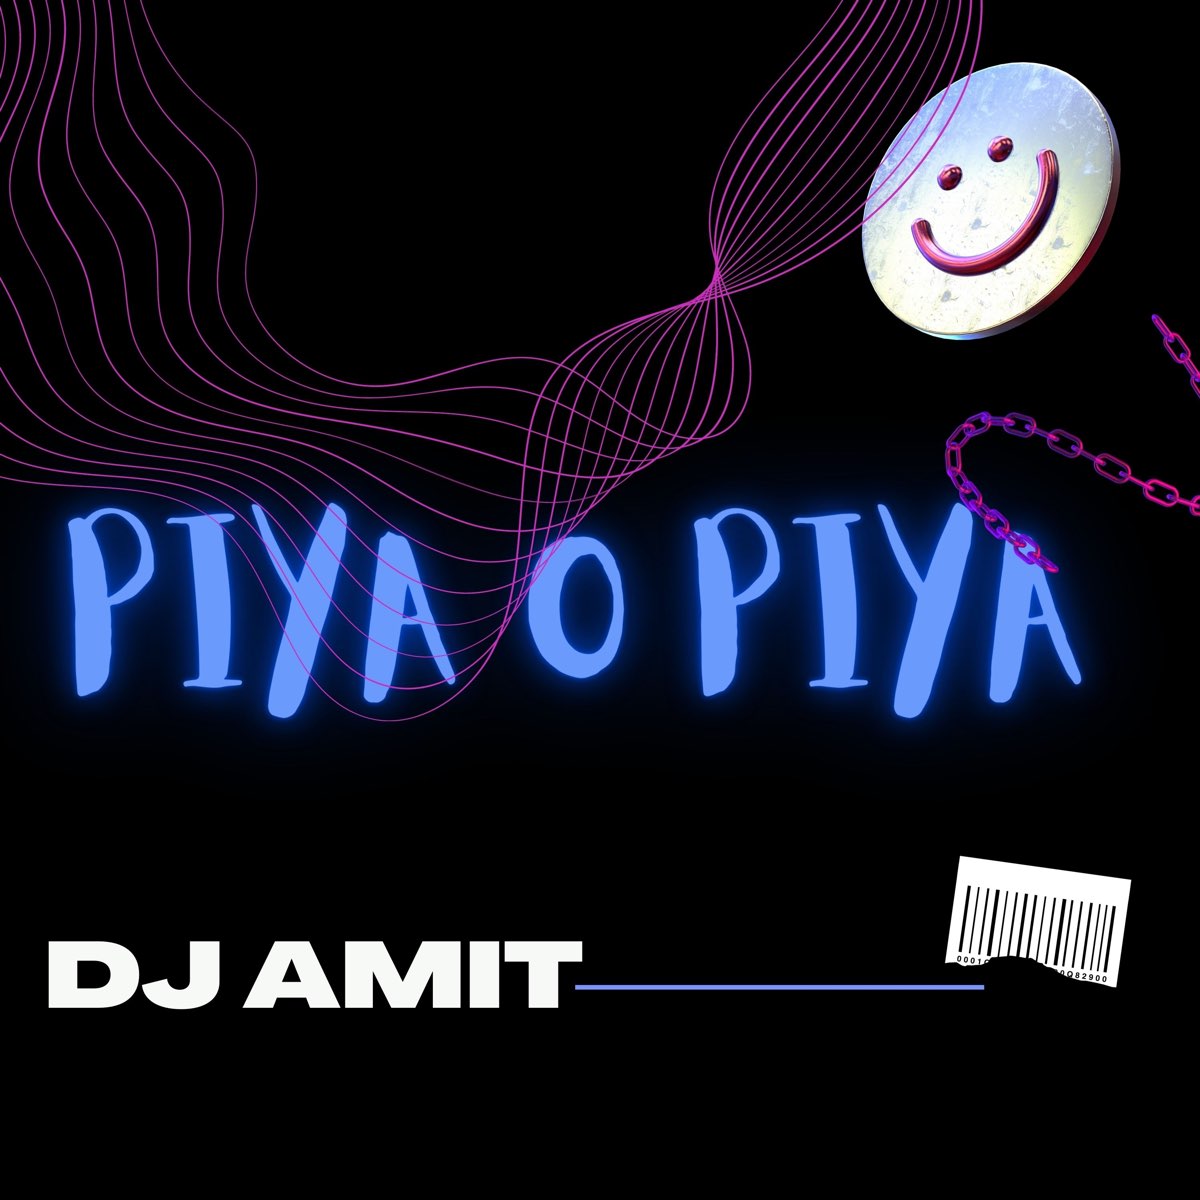 Piya O Piya - Single - Album by DJ Amit - Apple Music